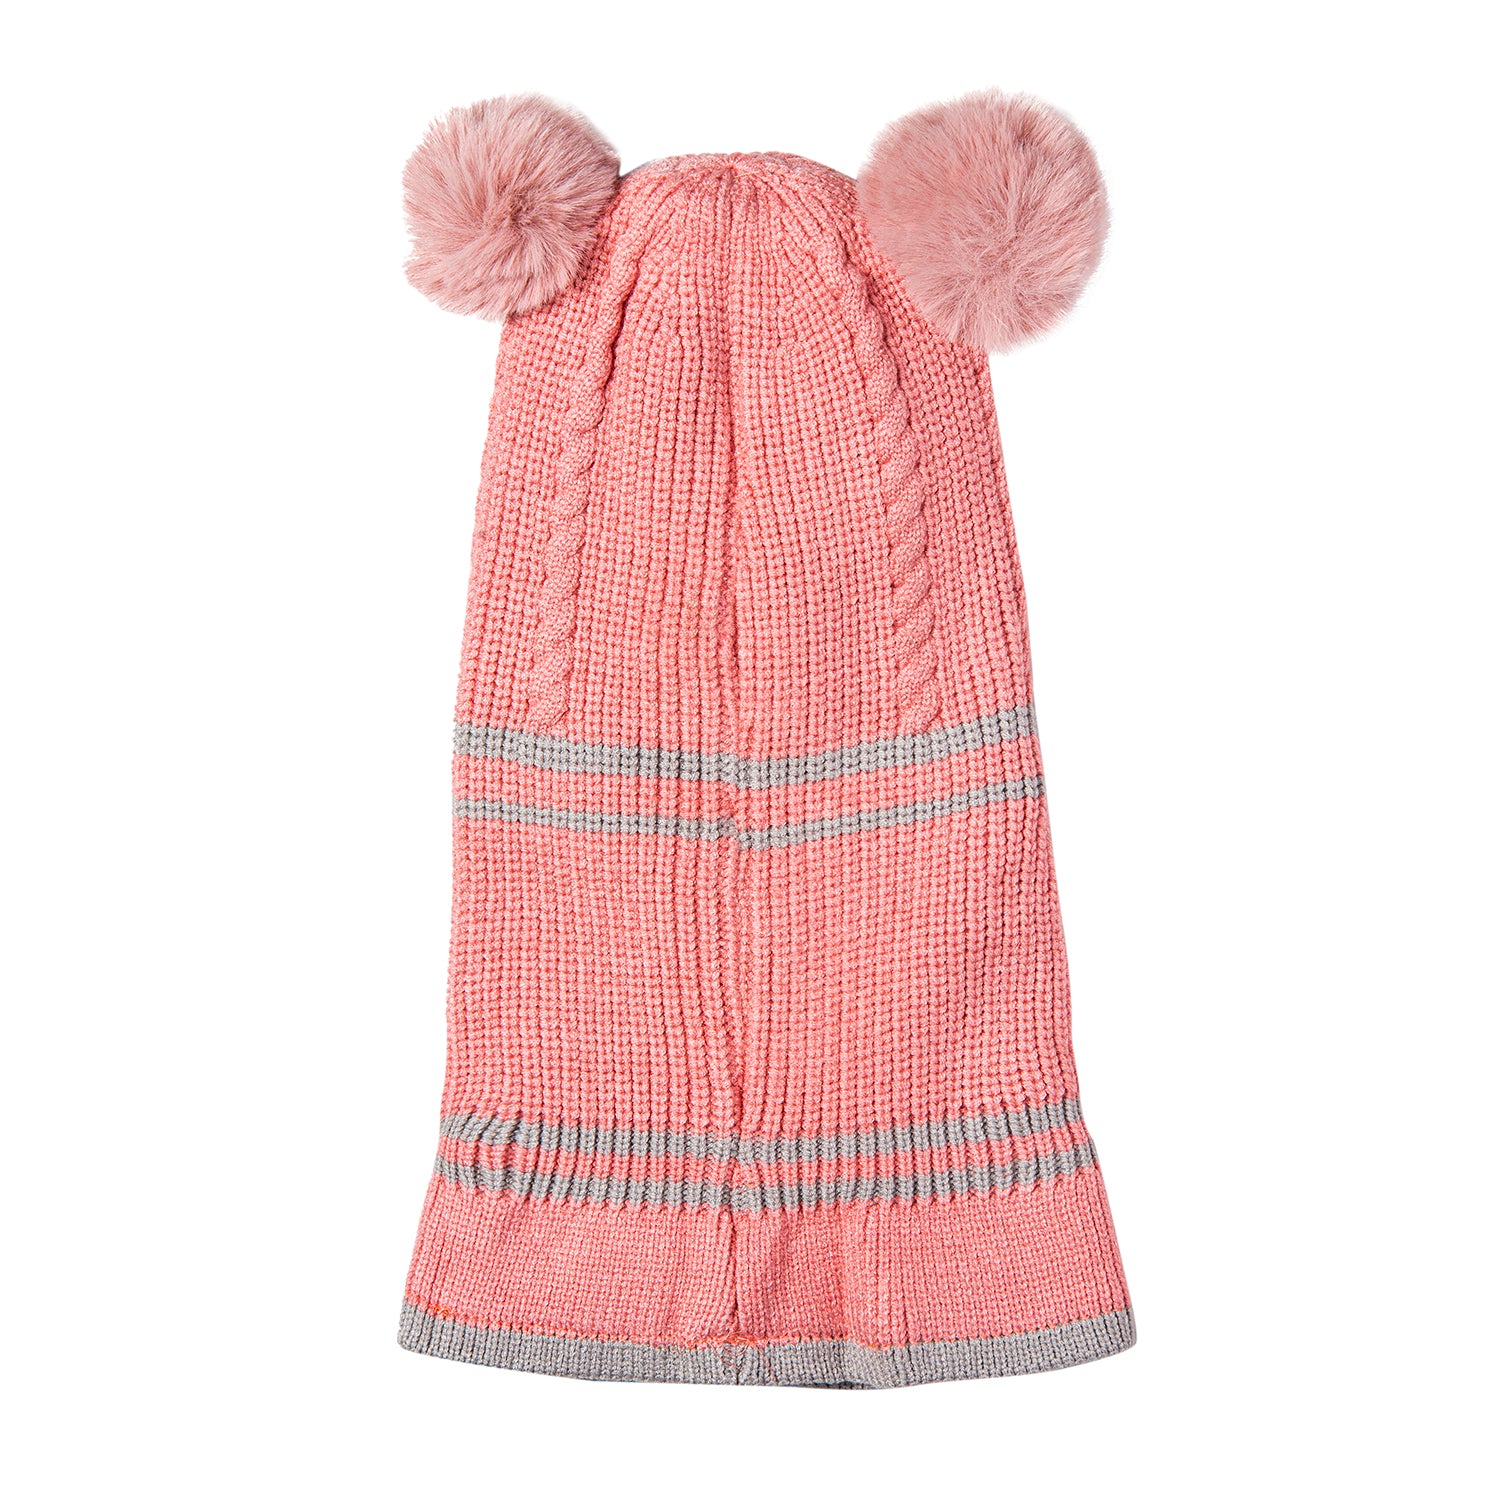 Winter Monkey Cap Woollen Hat Pom Pom Pink - Baby Moo